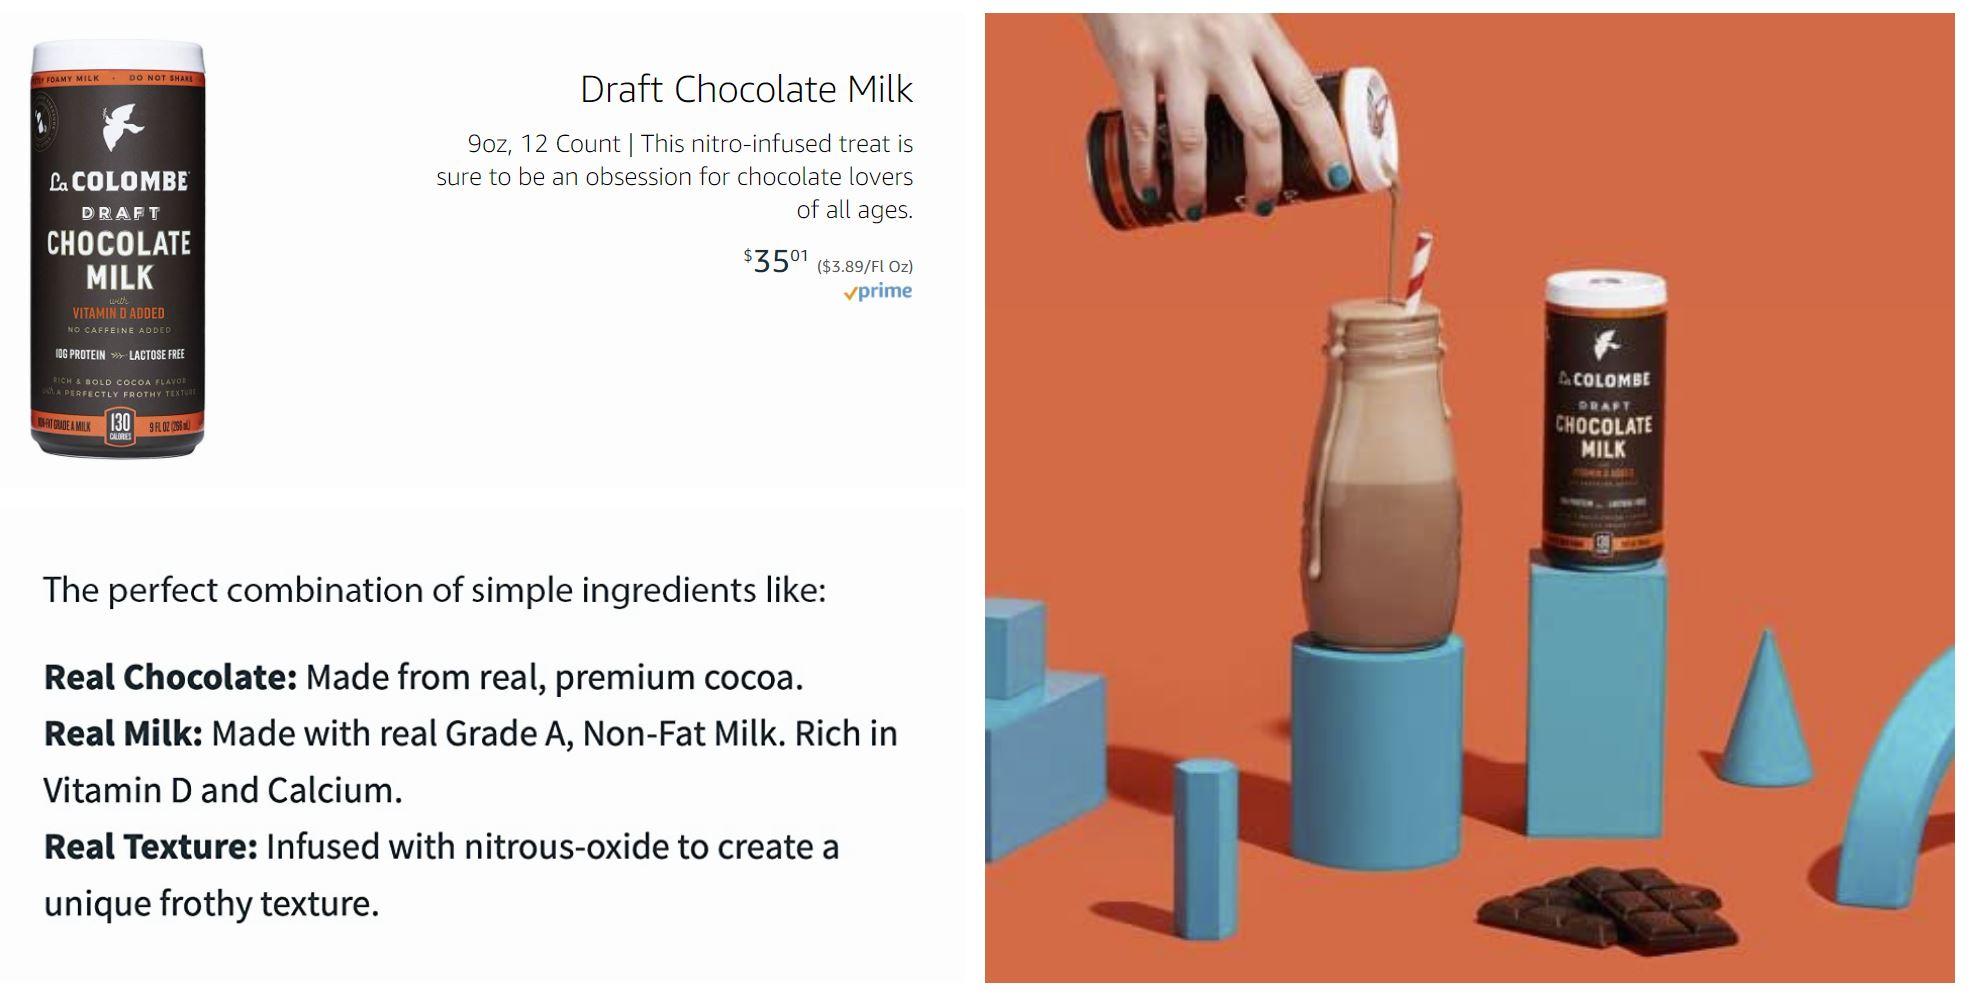 La Colombe draft chocolate milk on amazon